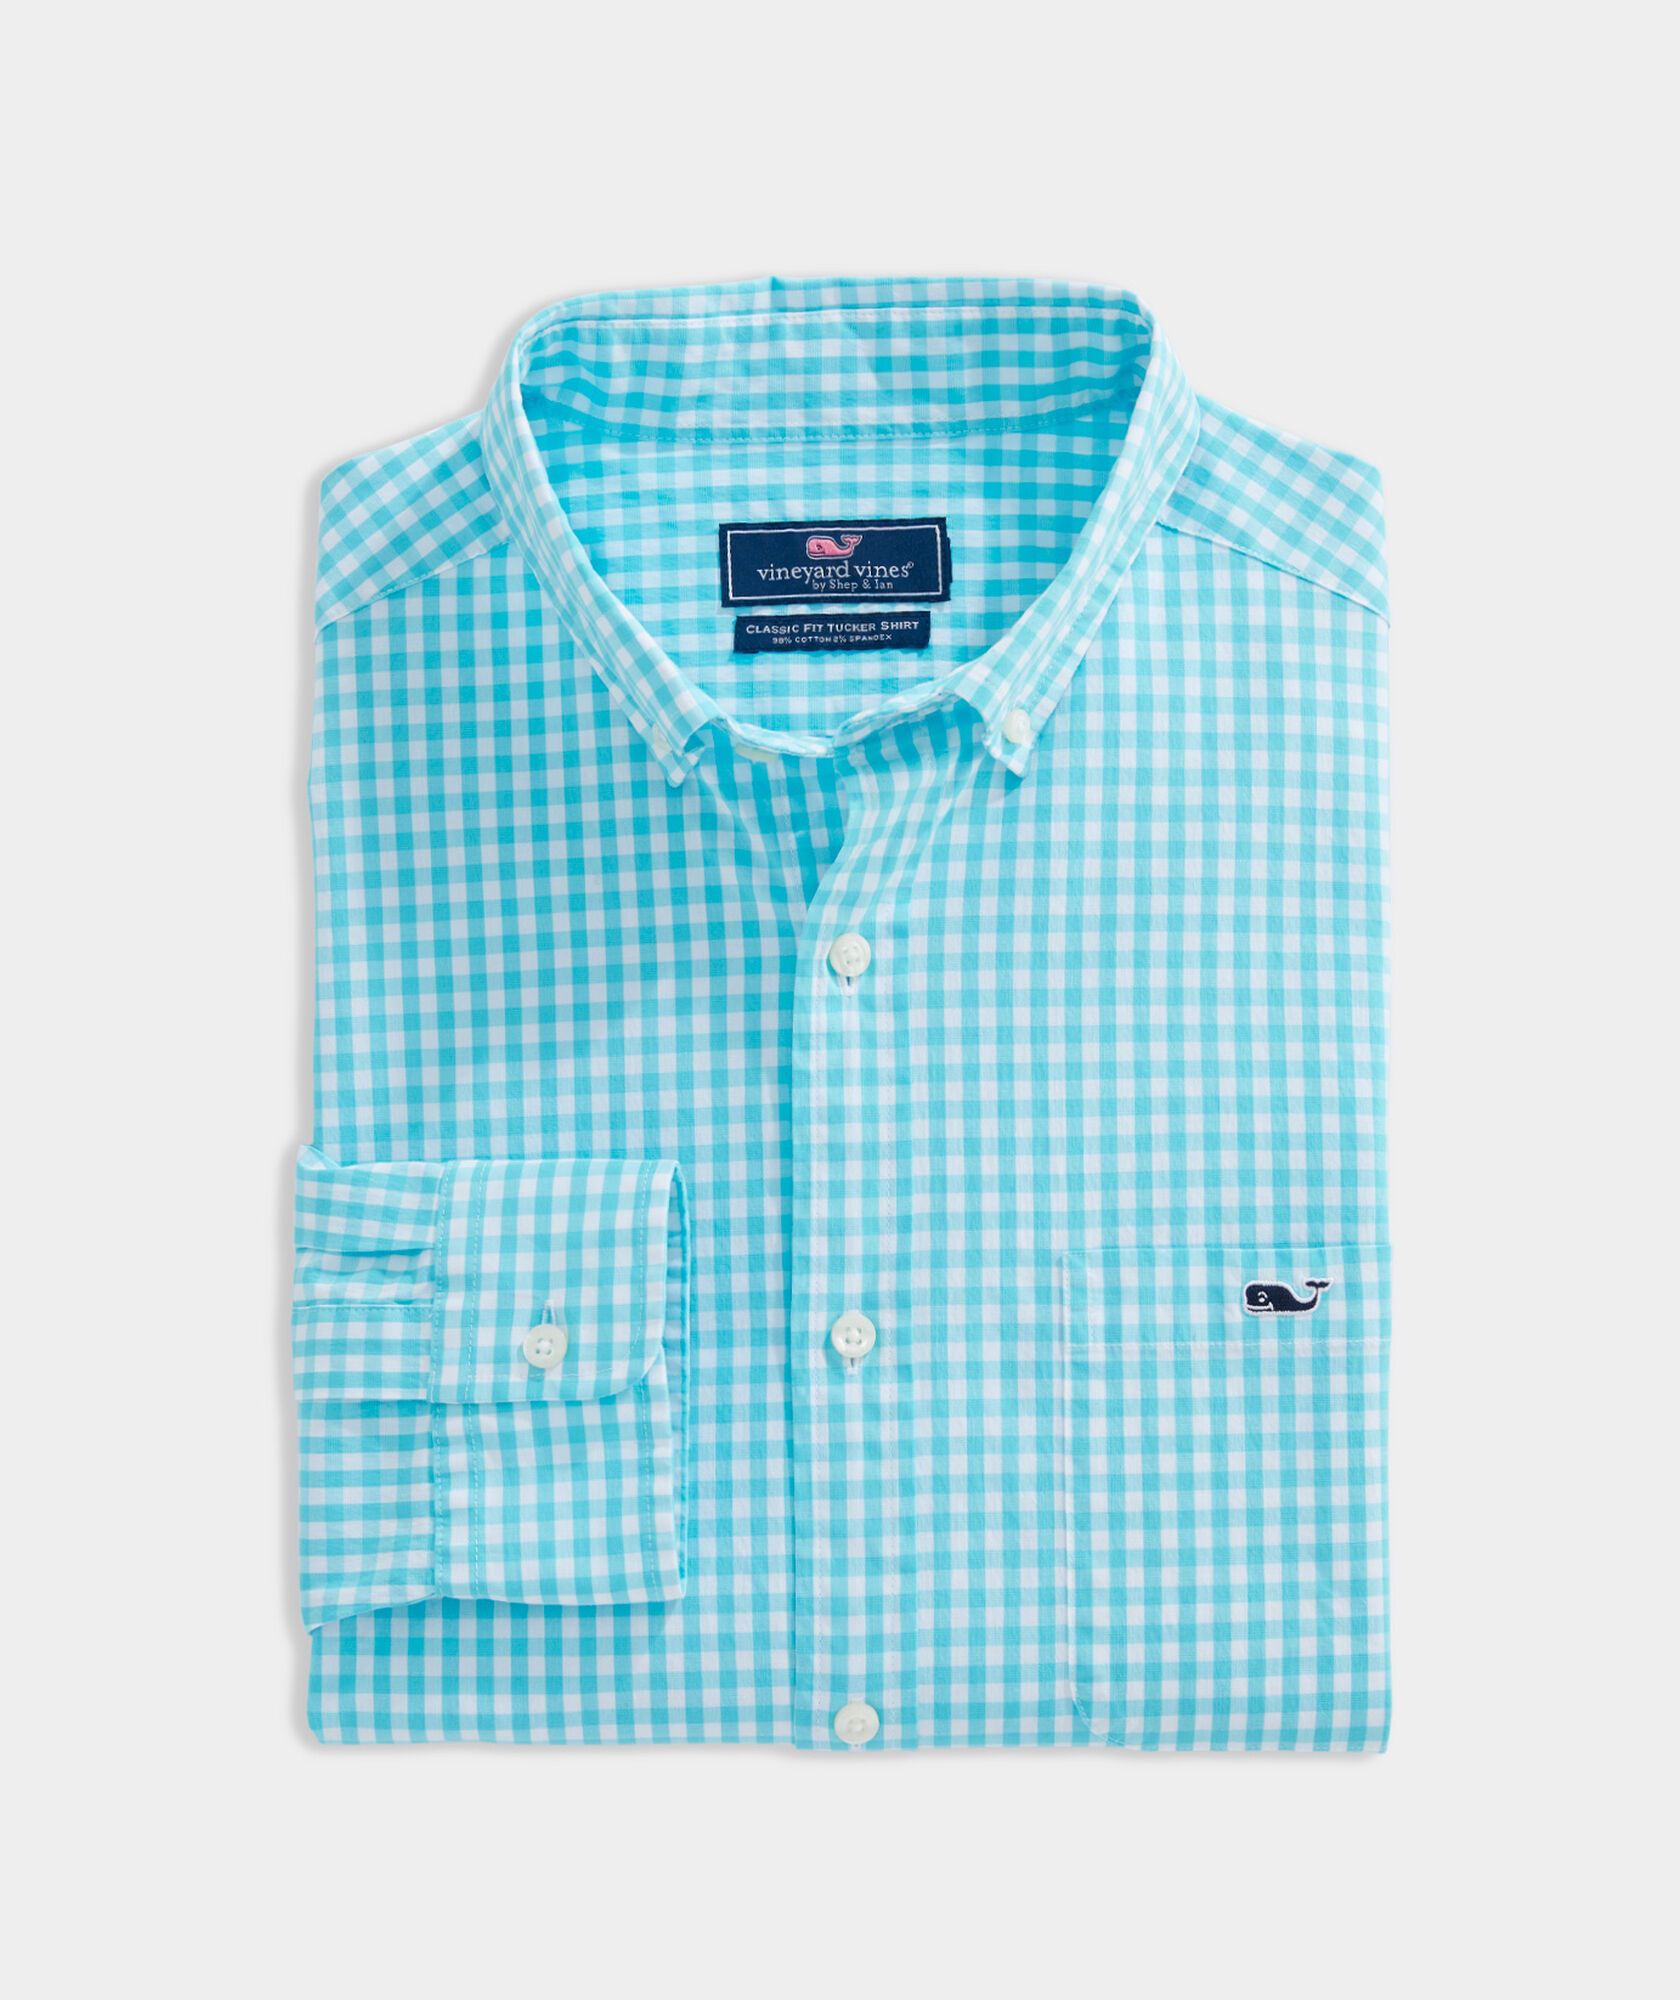 HERW Mens Long Sleeve Denim Slim Cotton Solid Color Mens Shirt Trend Shirt Light Blue,X-Large 